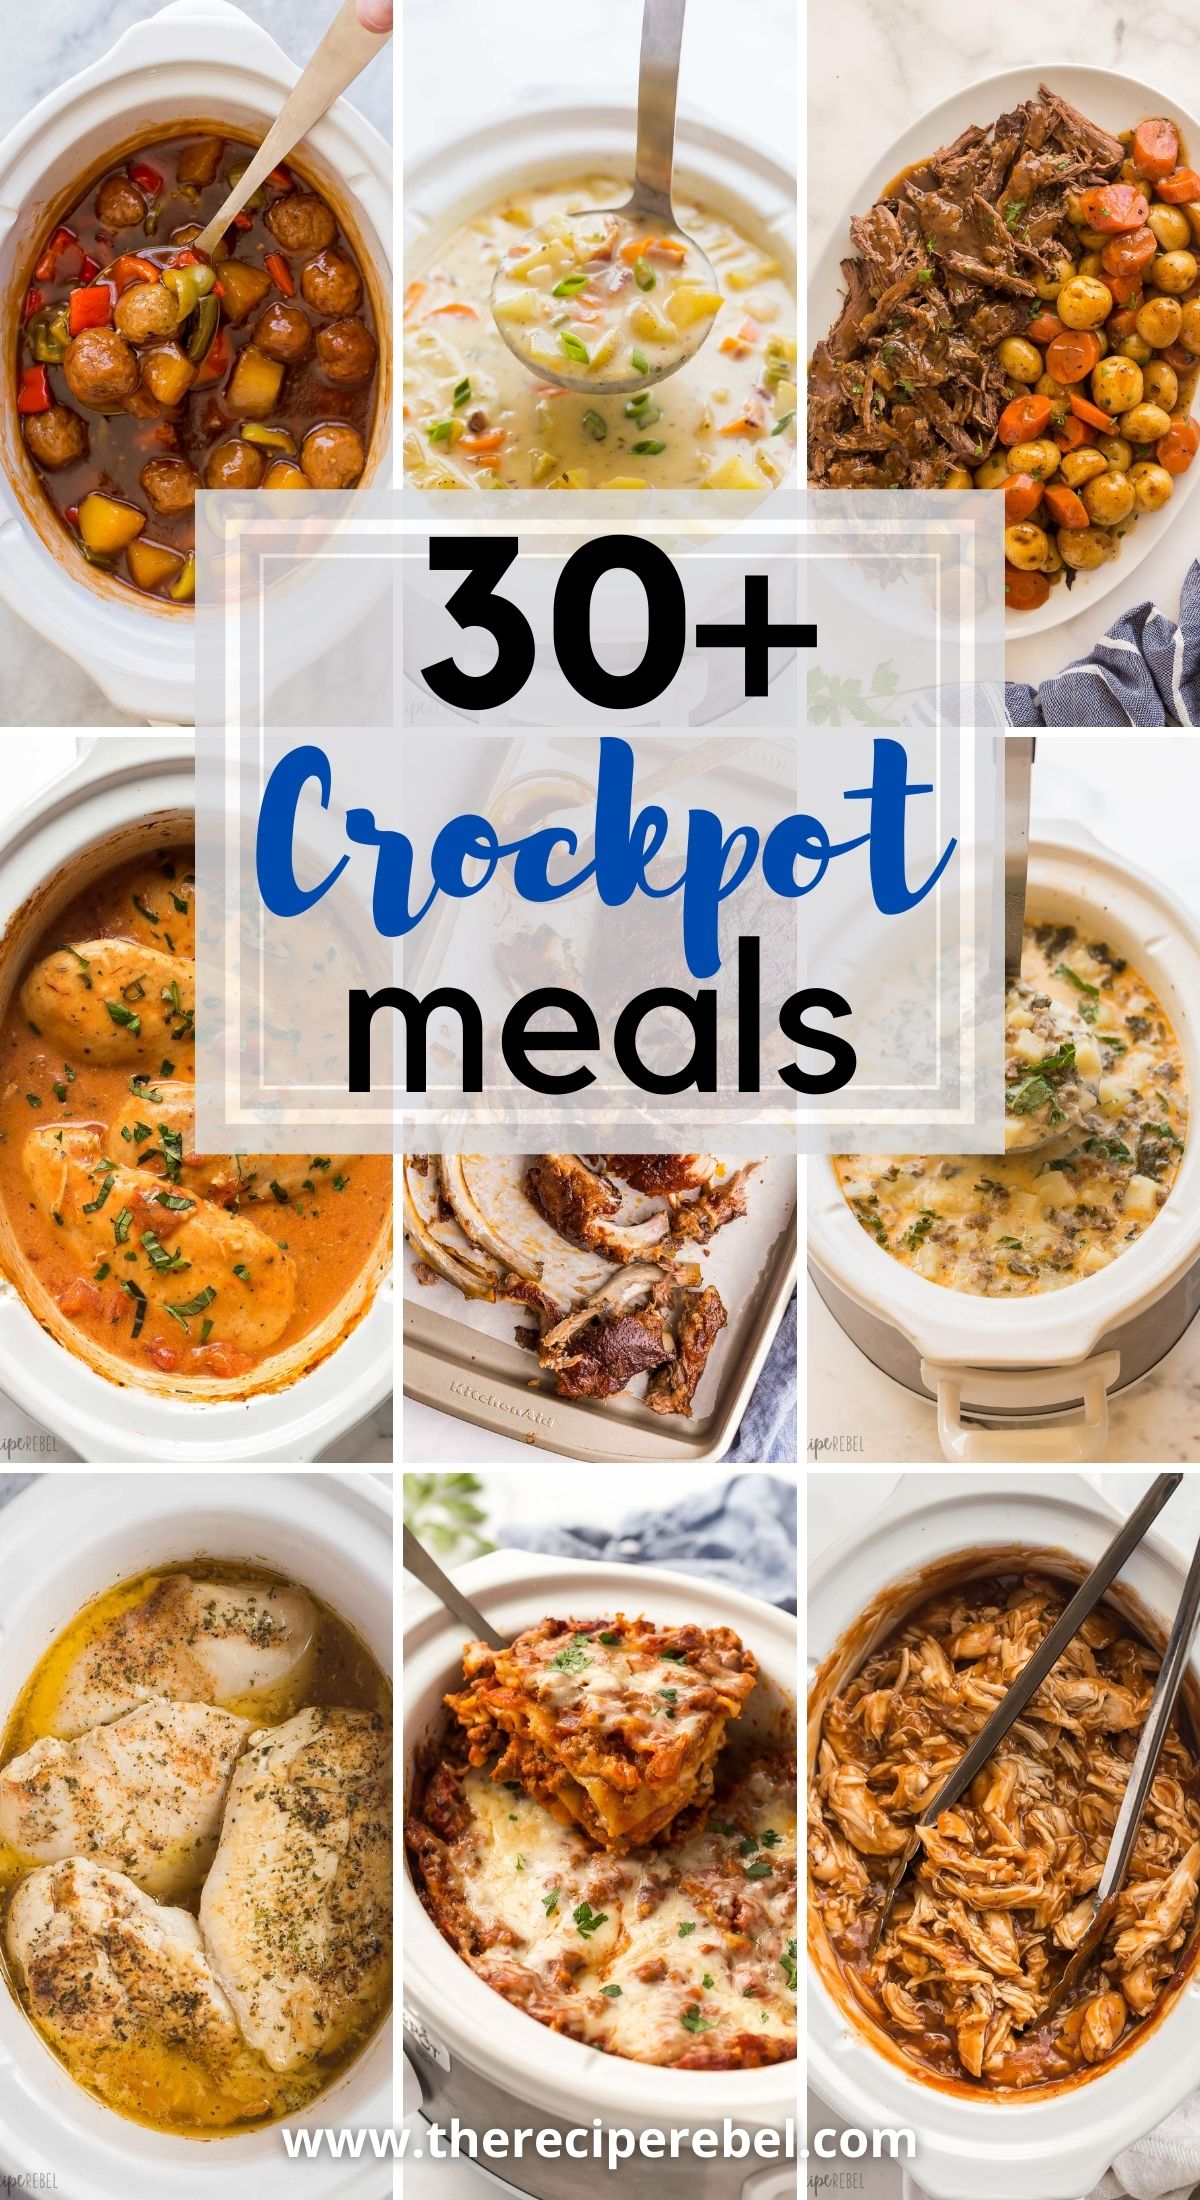 6 Mini Crock-Pot Lunch Ideas - Primary Playground  Lunch crockpot recipes,  Crock meals, Mini crockpot recipes